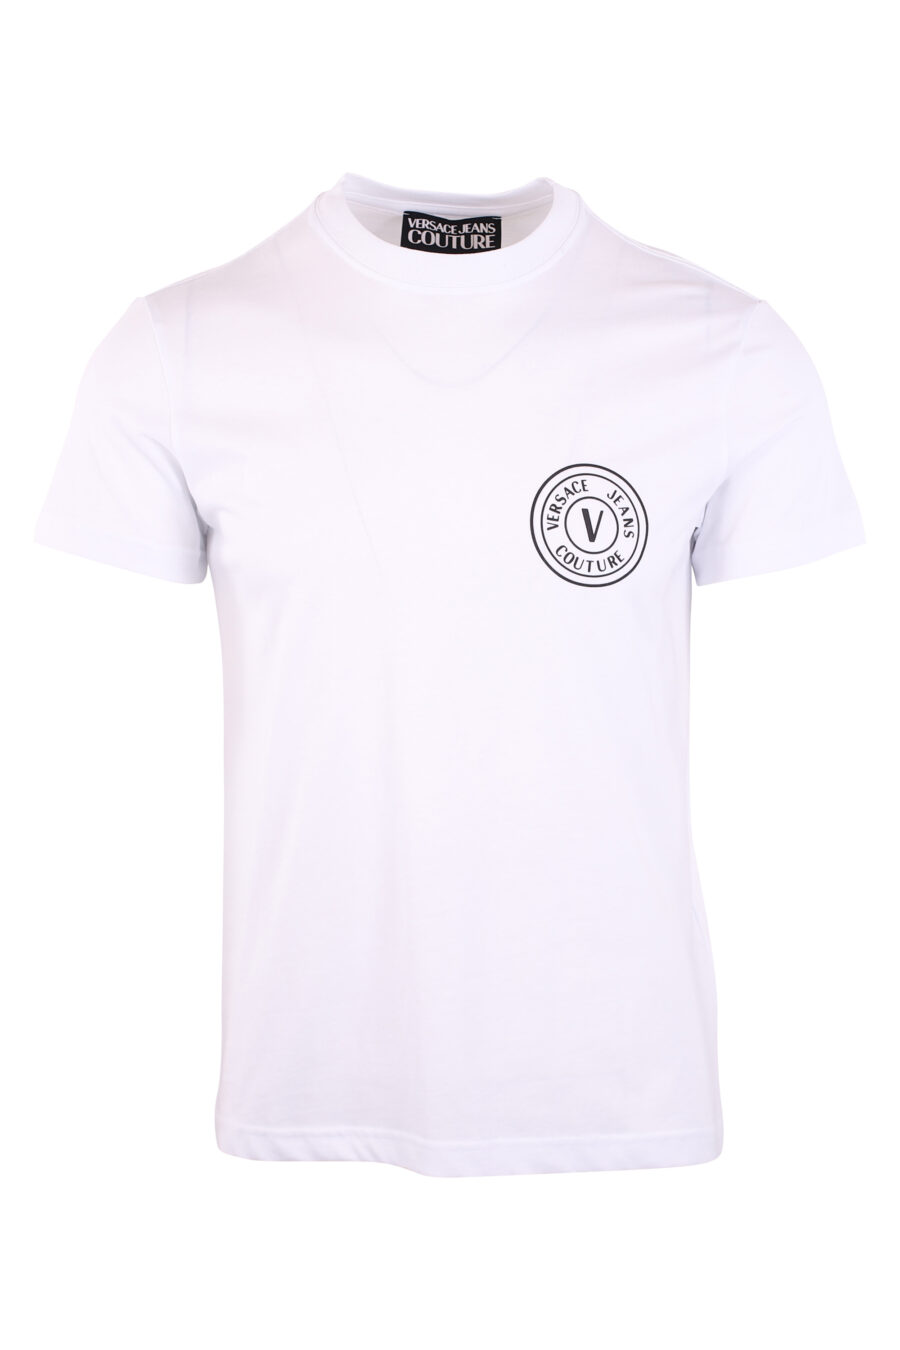 T-shirt white with black round logo small - IMG 3115